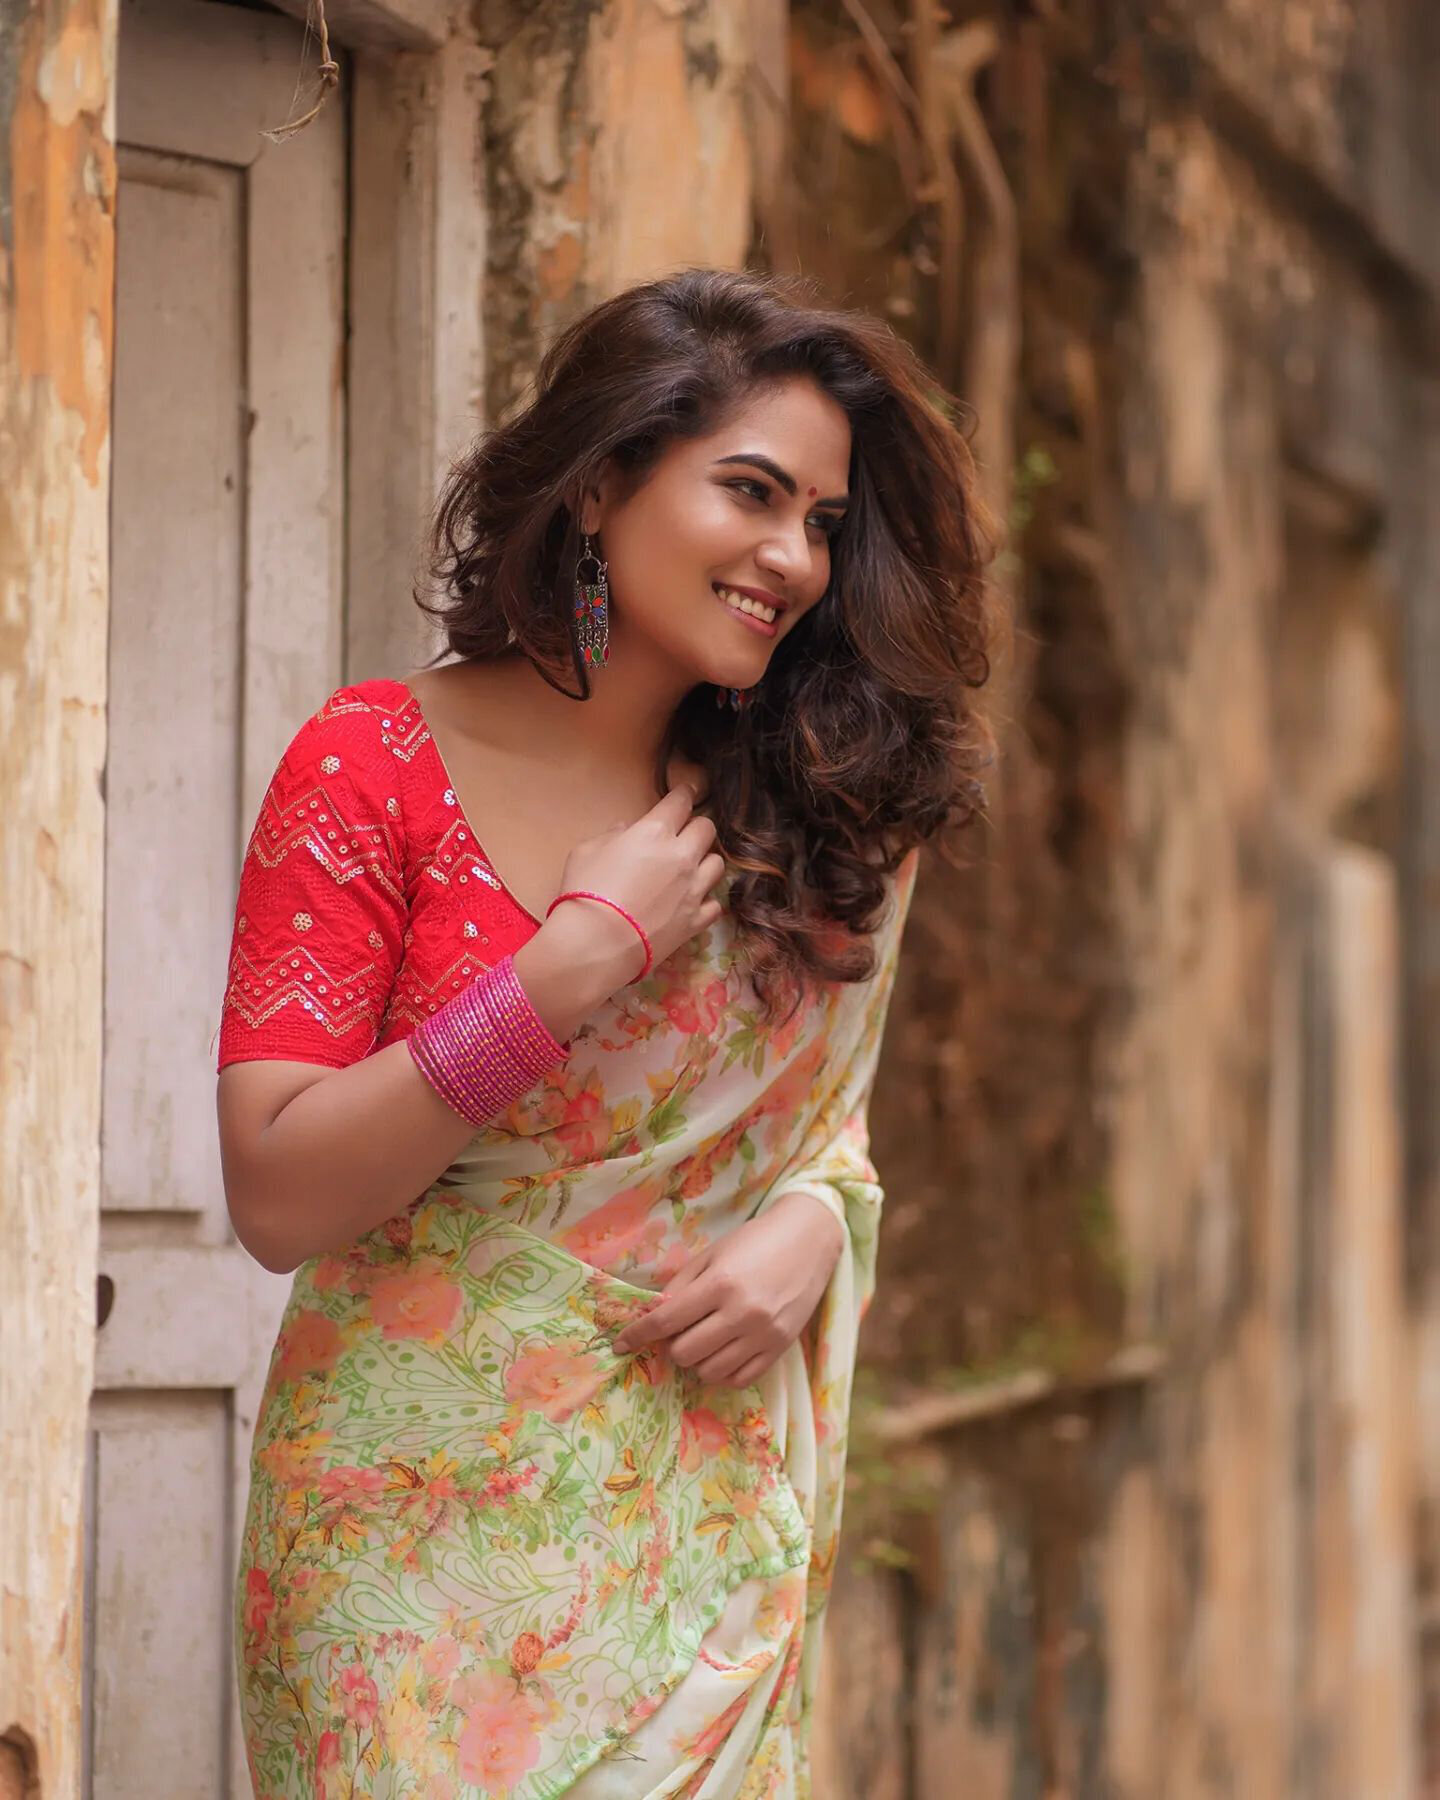 Deepthi Sunaina blends beauty and simplicity in a green cotton